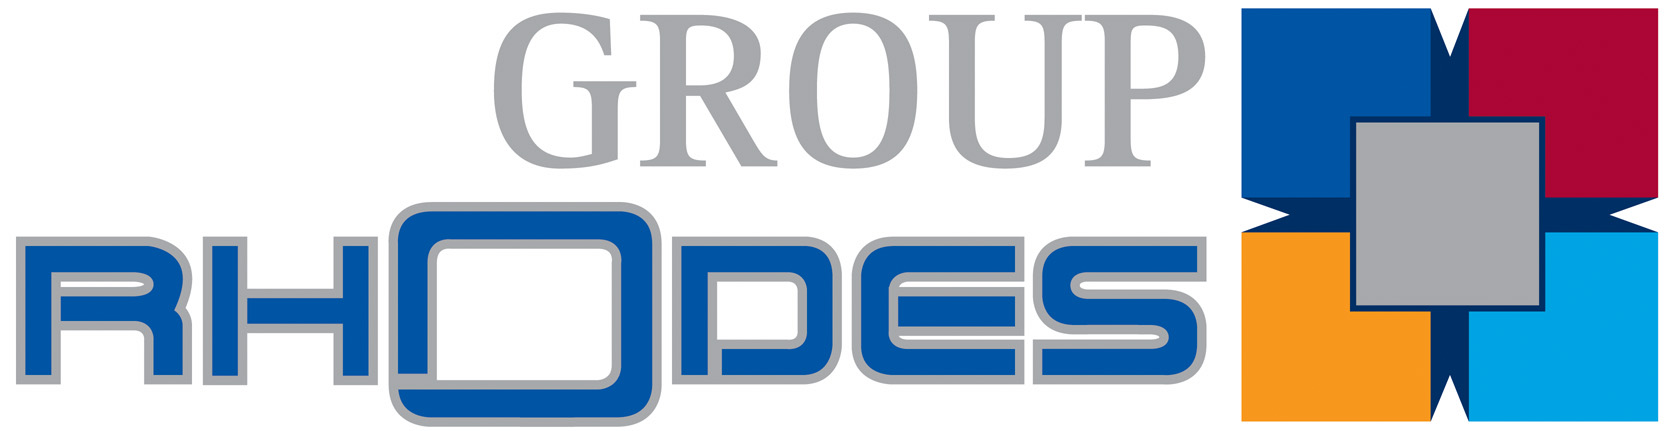 Group_Rhodes_logo_RGB